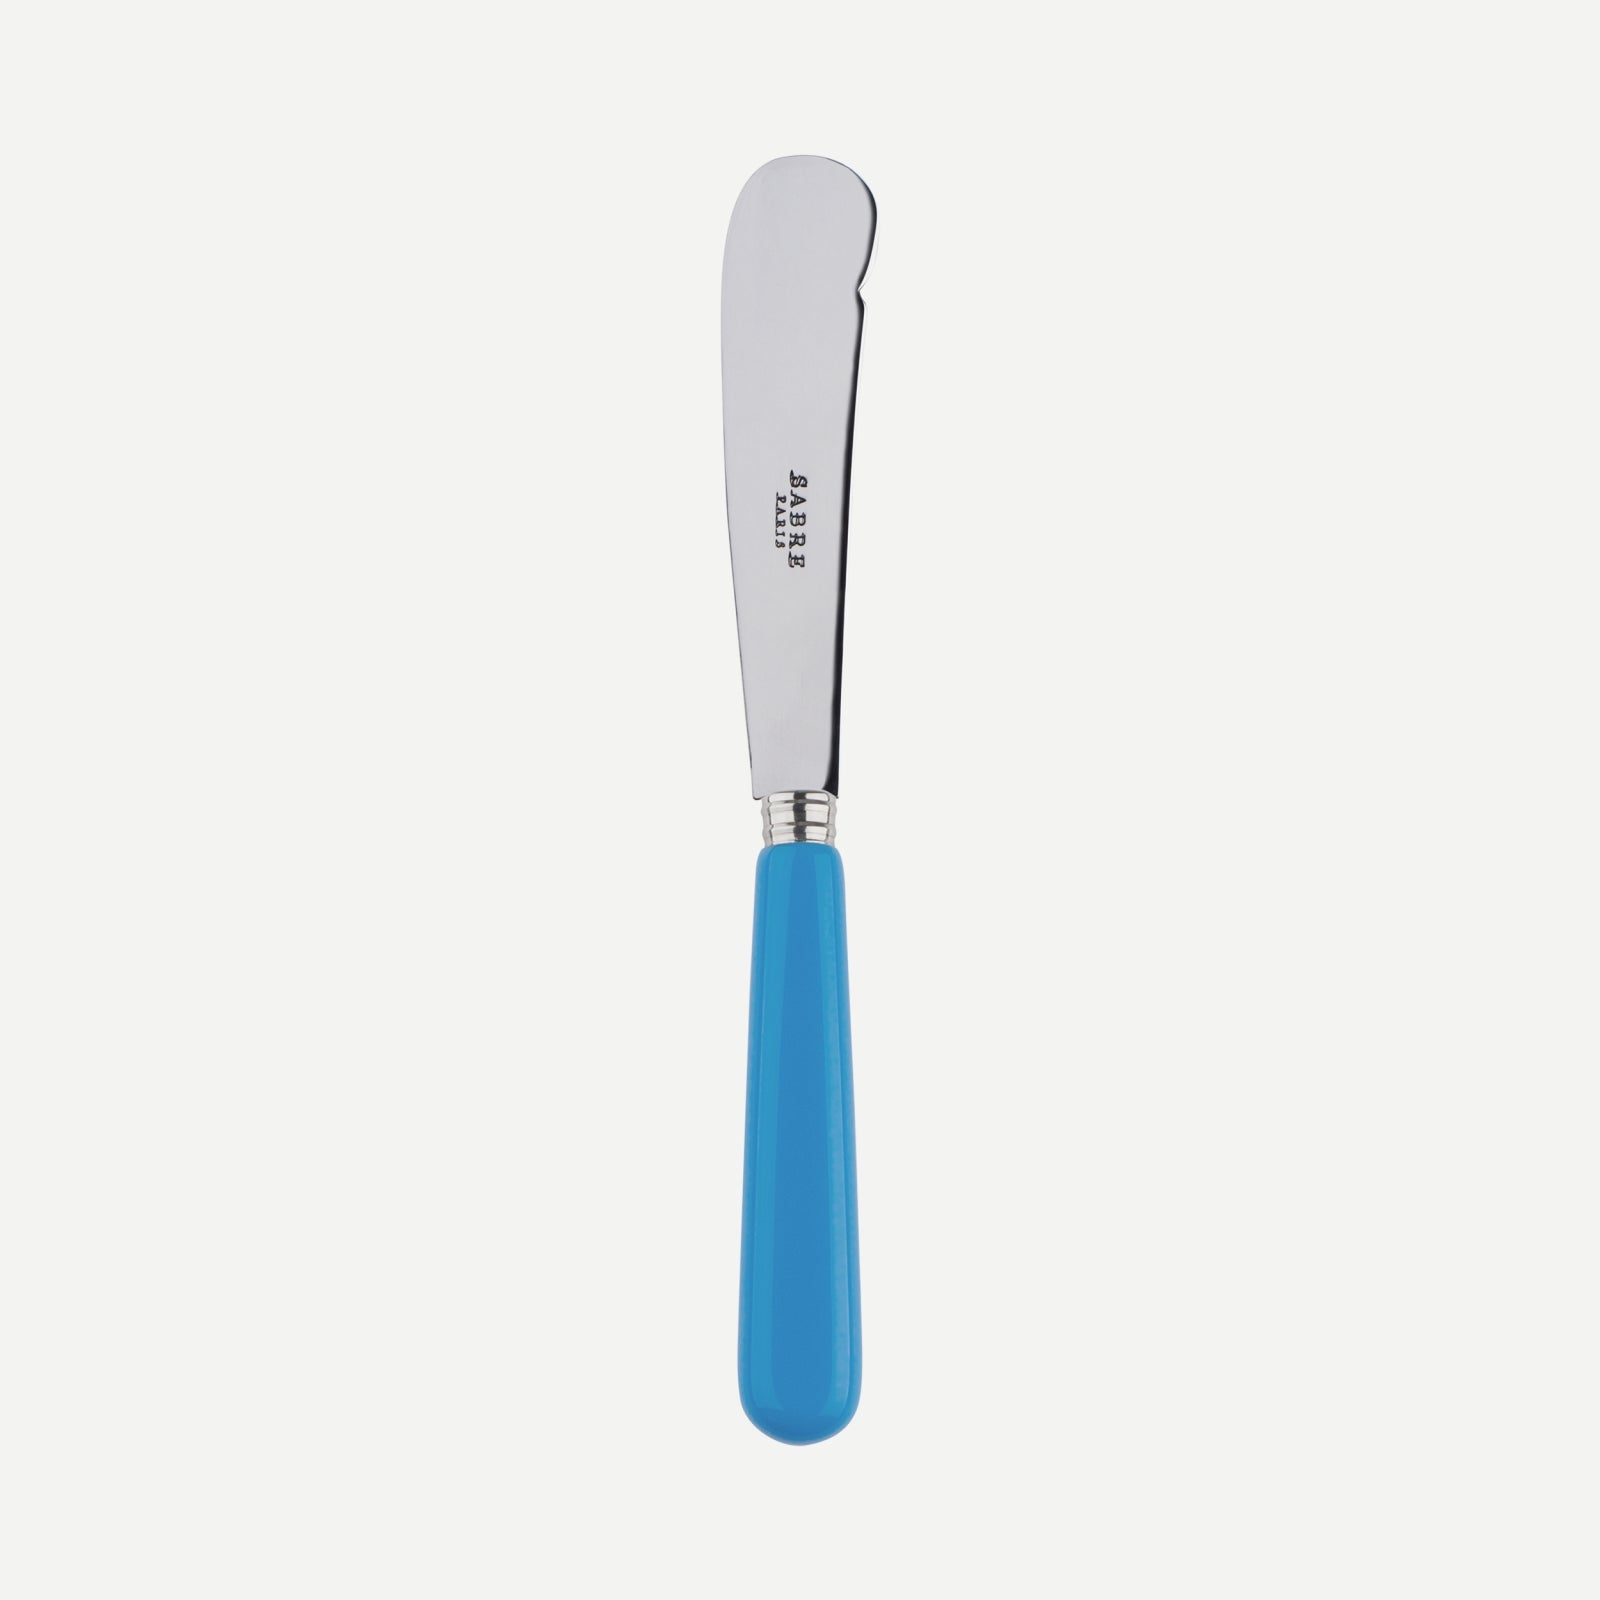 Butter knife - Pop unis - Cerulean blue